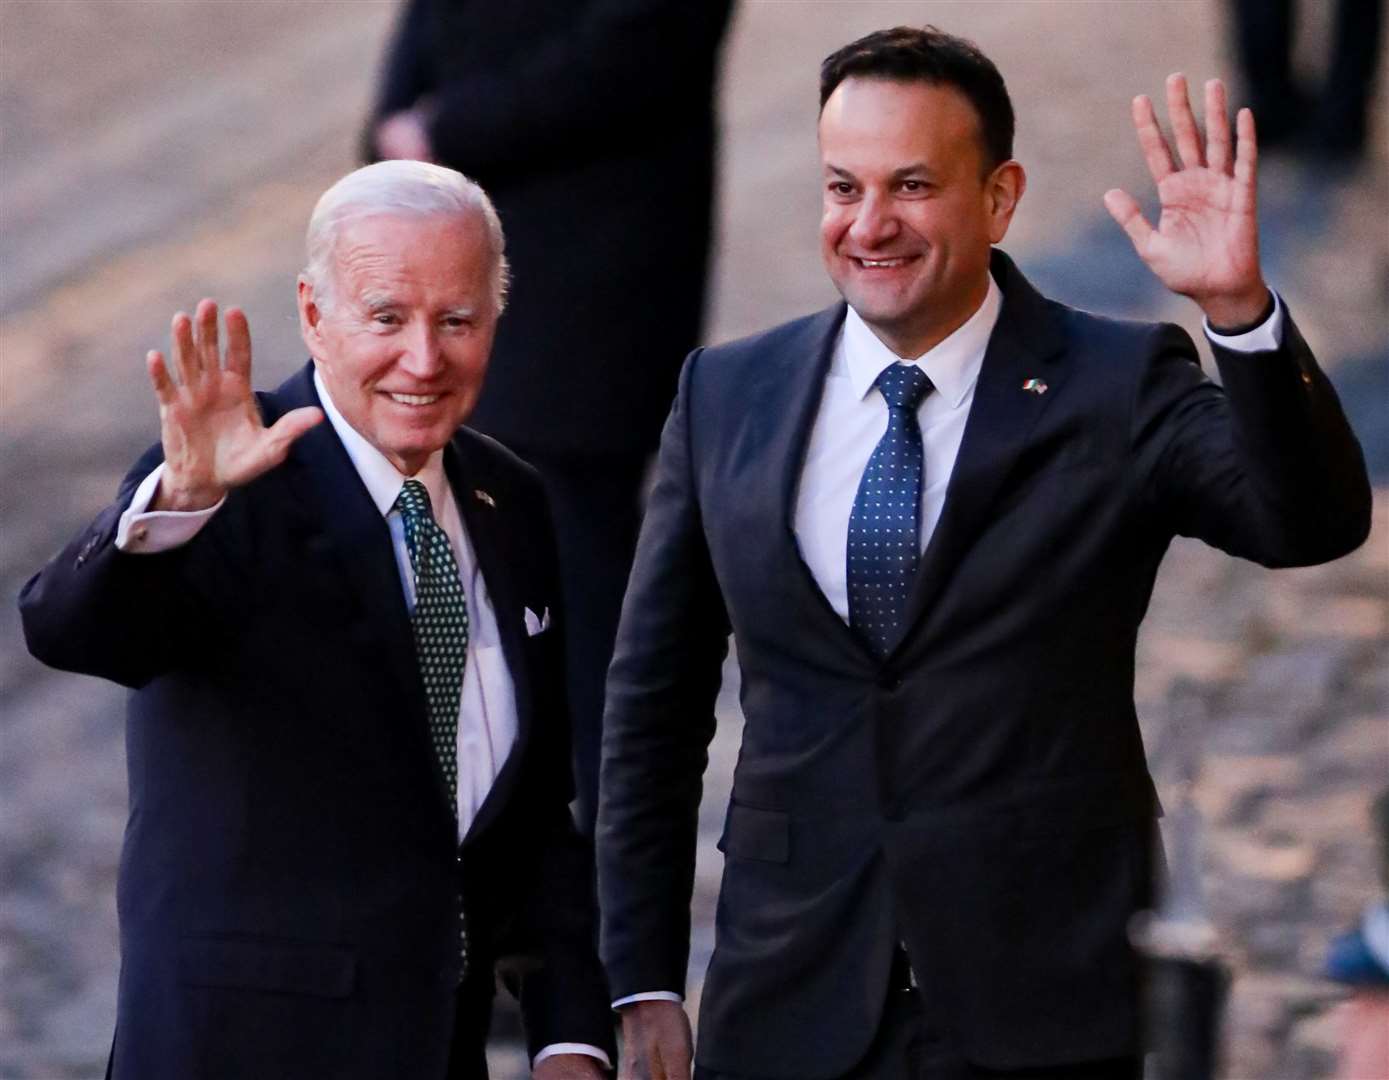 Joe Biden is greeted by Taoiseach Leo Varadkar as he arrives at Dublin Castle (Damien Storan/PA(